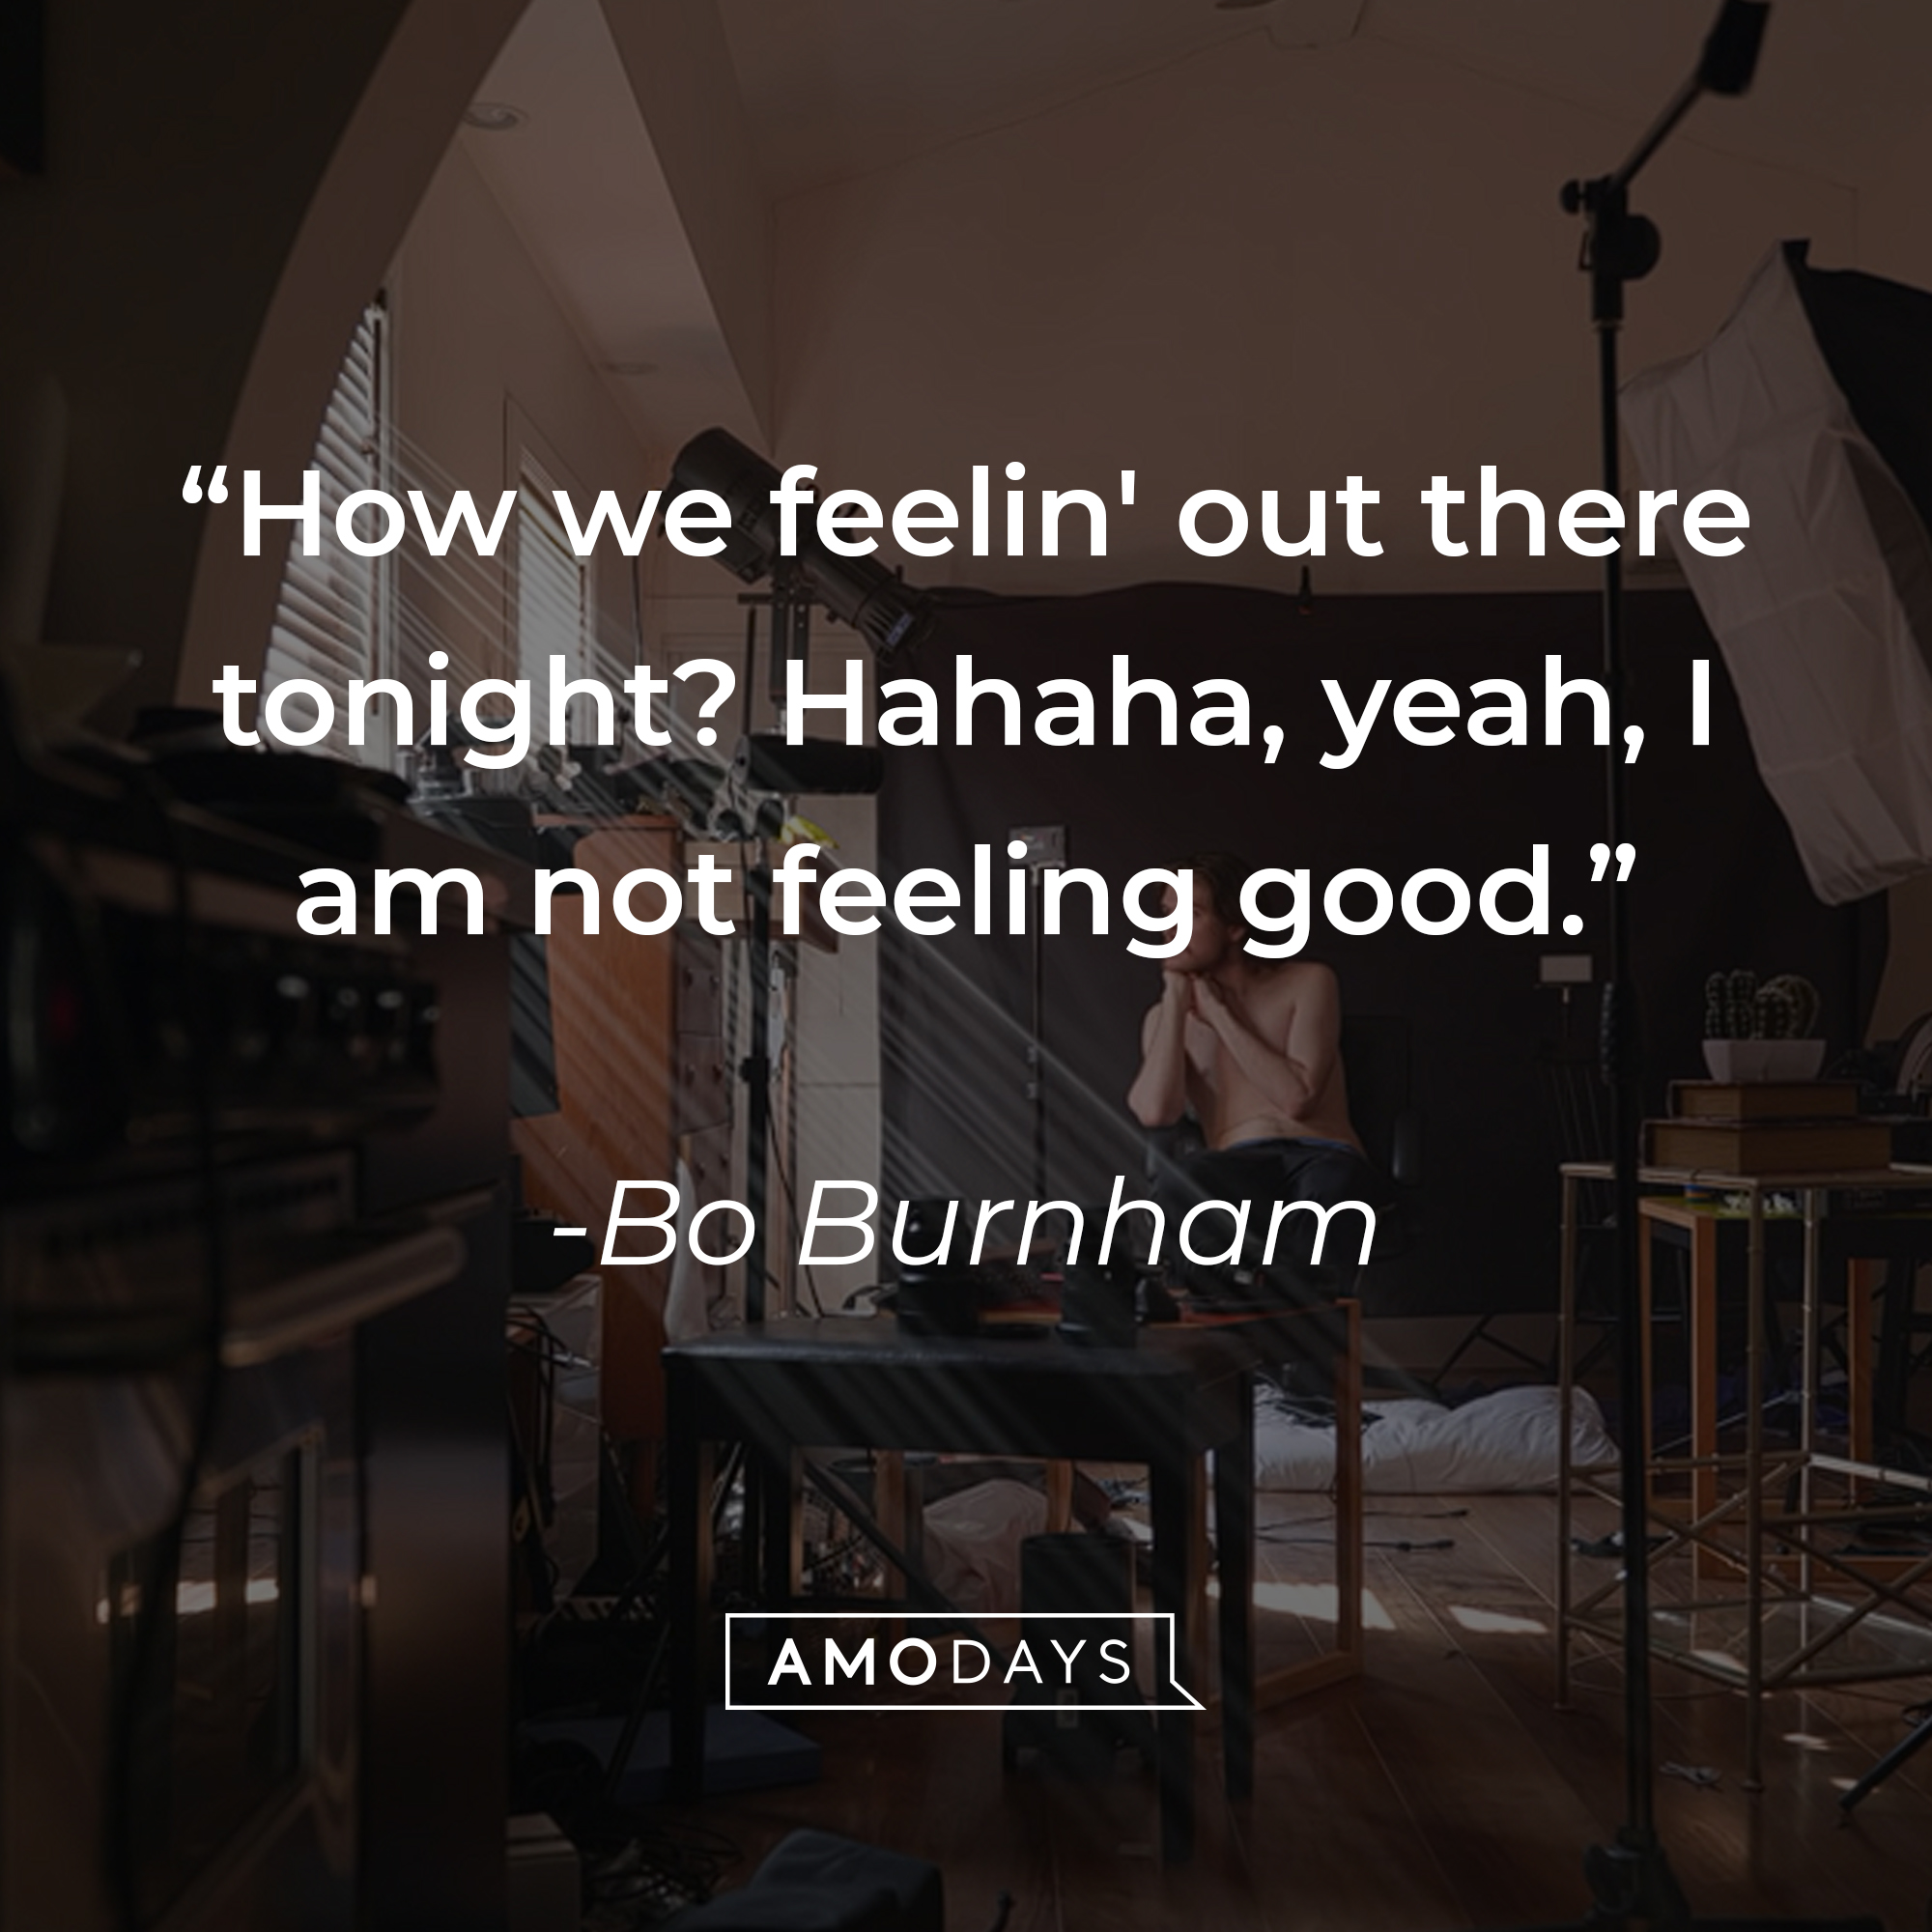 Bo Burnham's quote: "How we feelin' out there tonight? Hahaha, yeah, I am not feeling good." | Source: youtube.com/boburnham